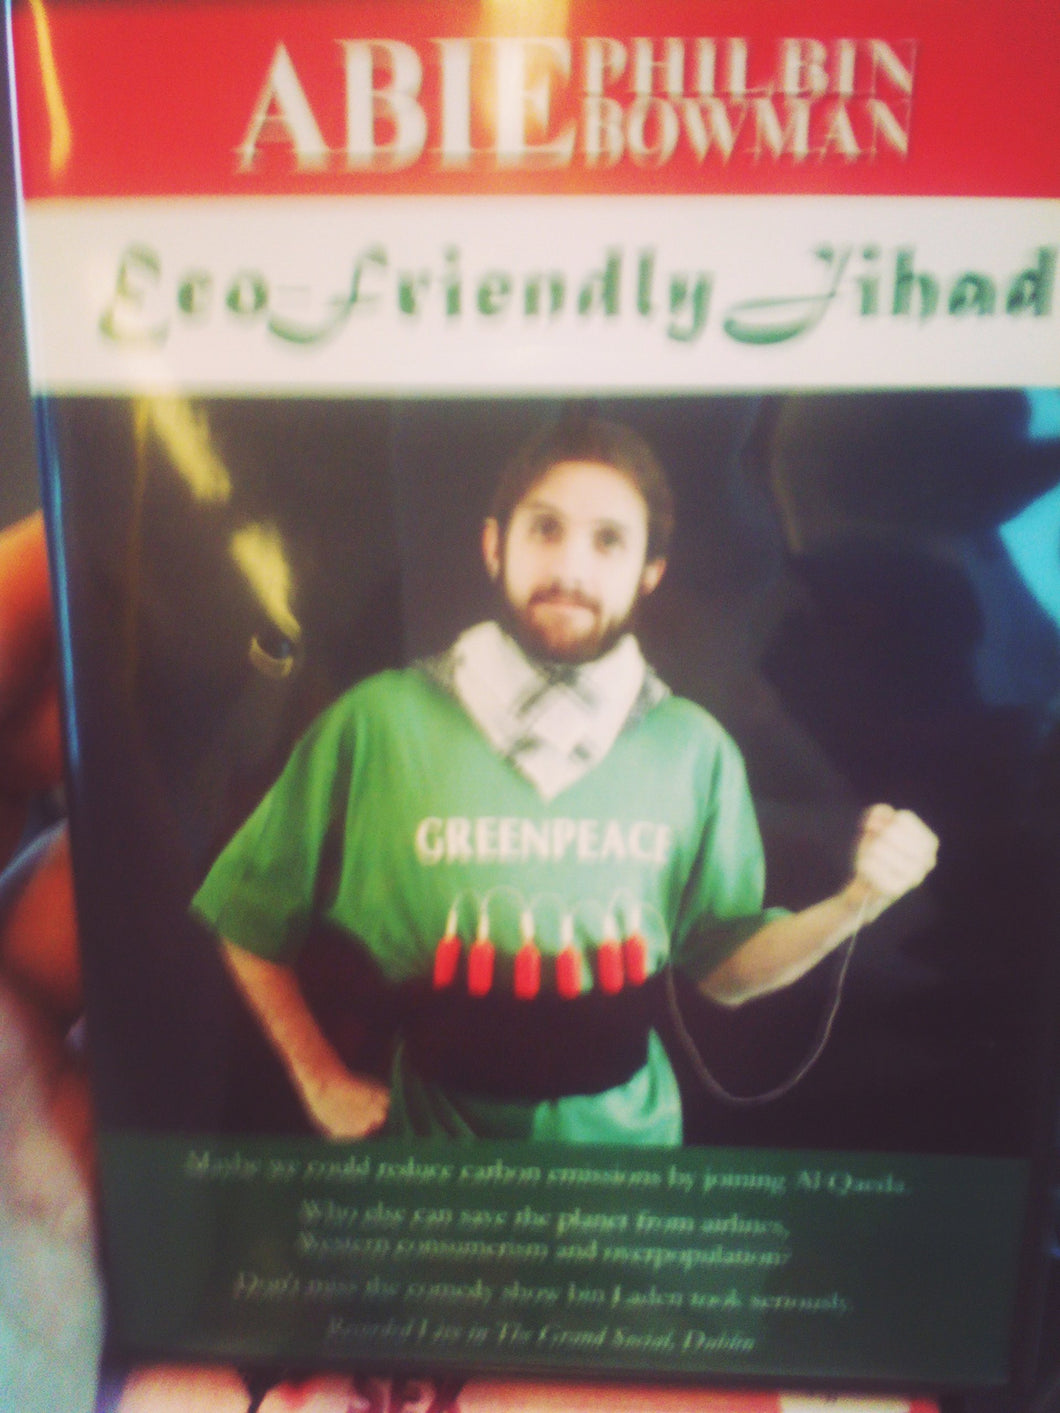 Abie Philbin Bowman: Eco friendly Jihad DVD